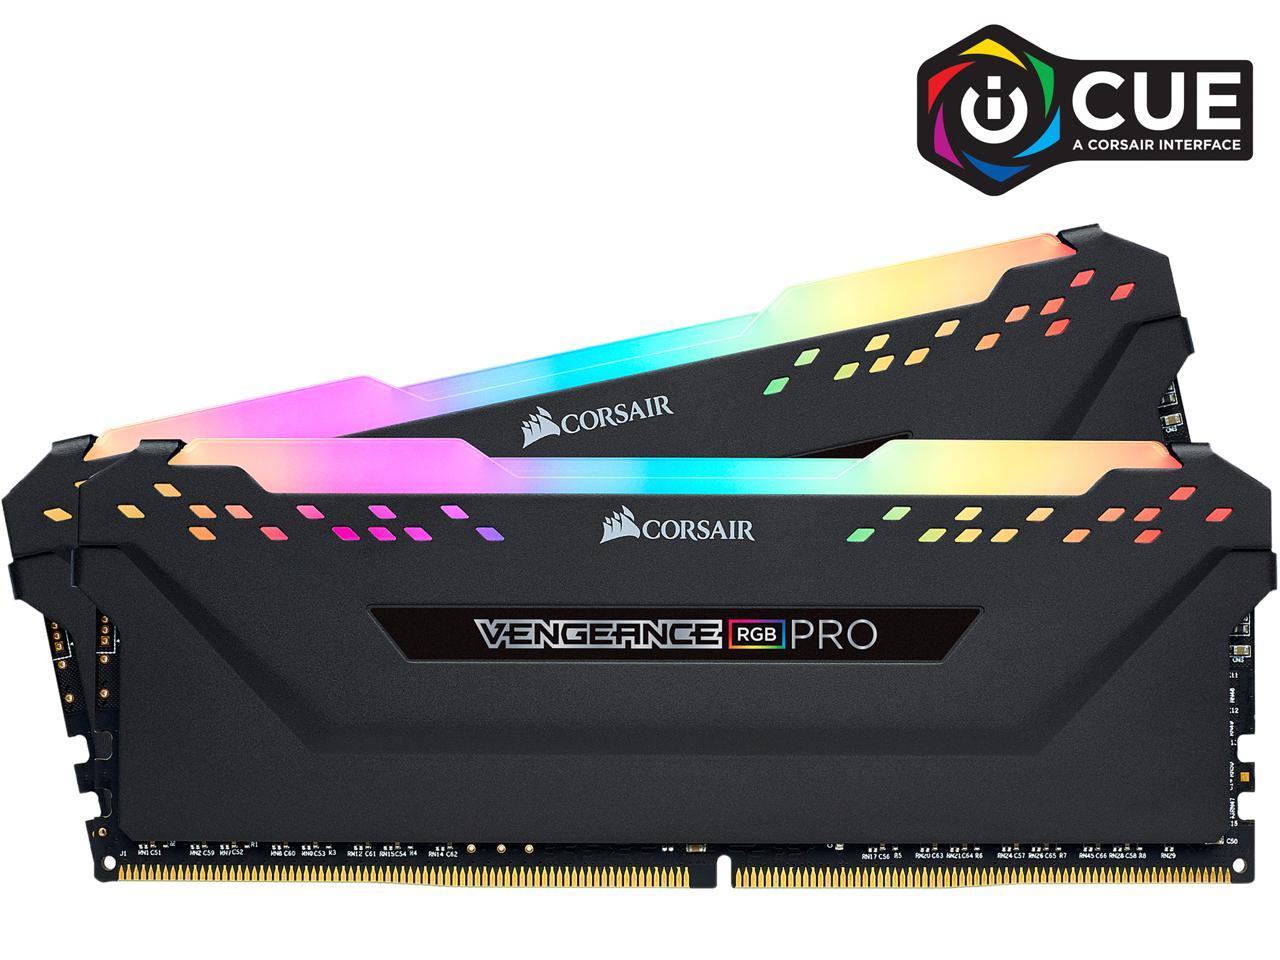 32GB (2x 16) CORSAIR VENGEANCE RGB PRO  DDR4 3200 Desktop Memory Kit @Newegg $144